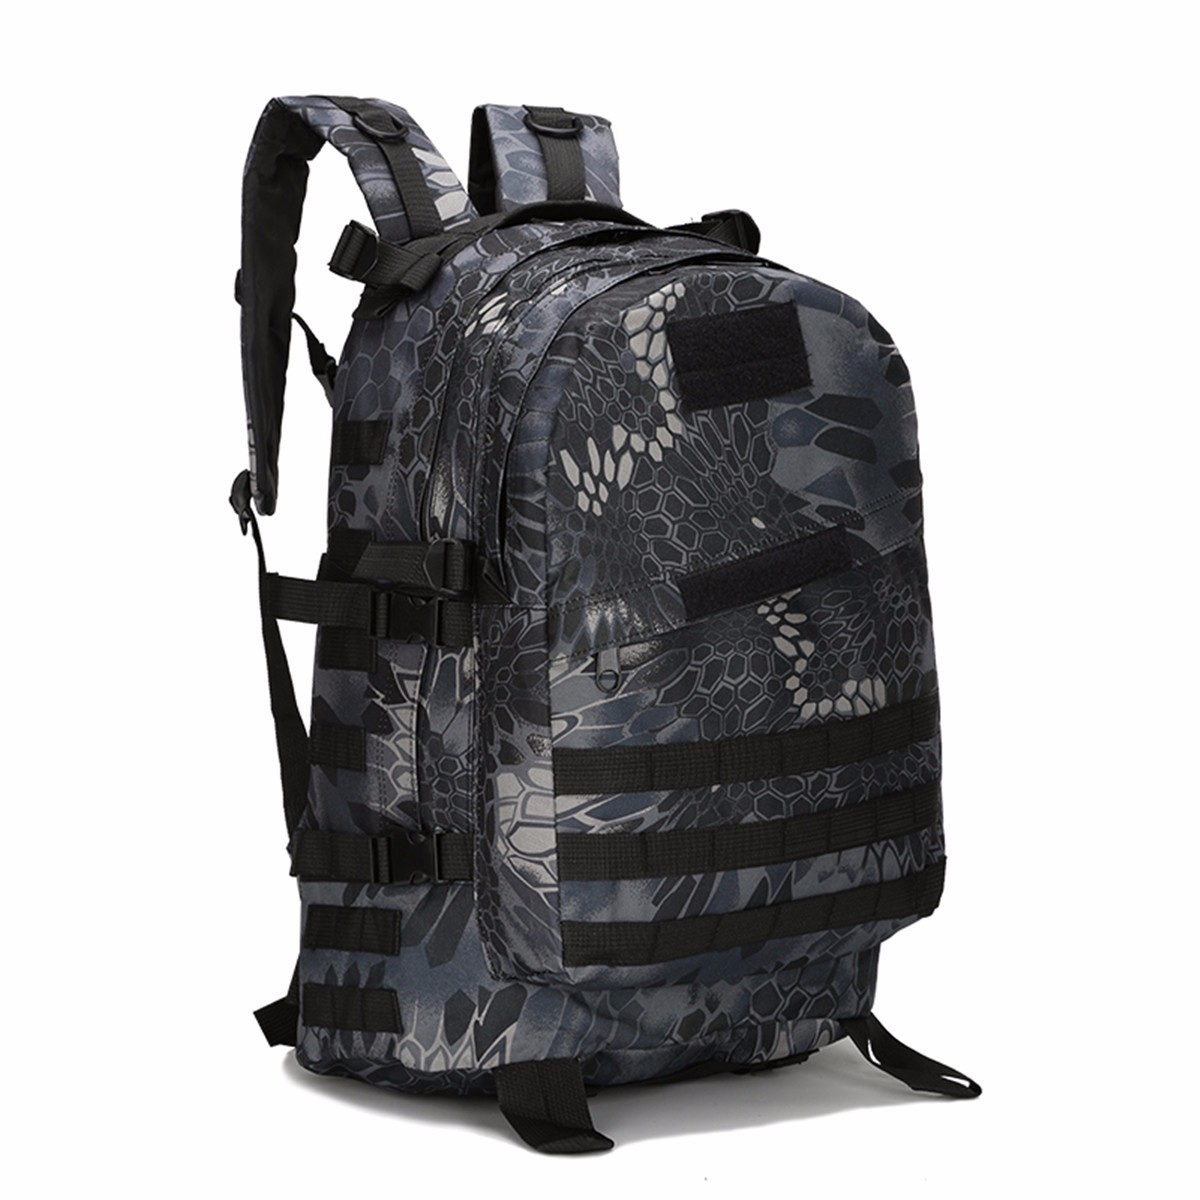 40L-Backpack-Unisex-Nylon-Sports-Backpack-Travel-Hiking-Climbing-Camping-Bag-1817655-3